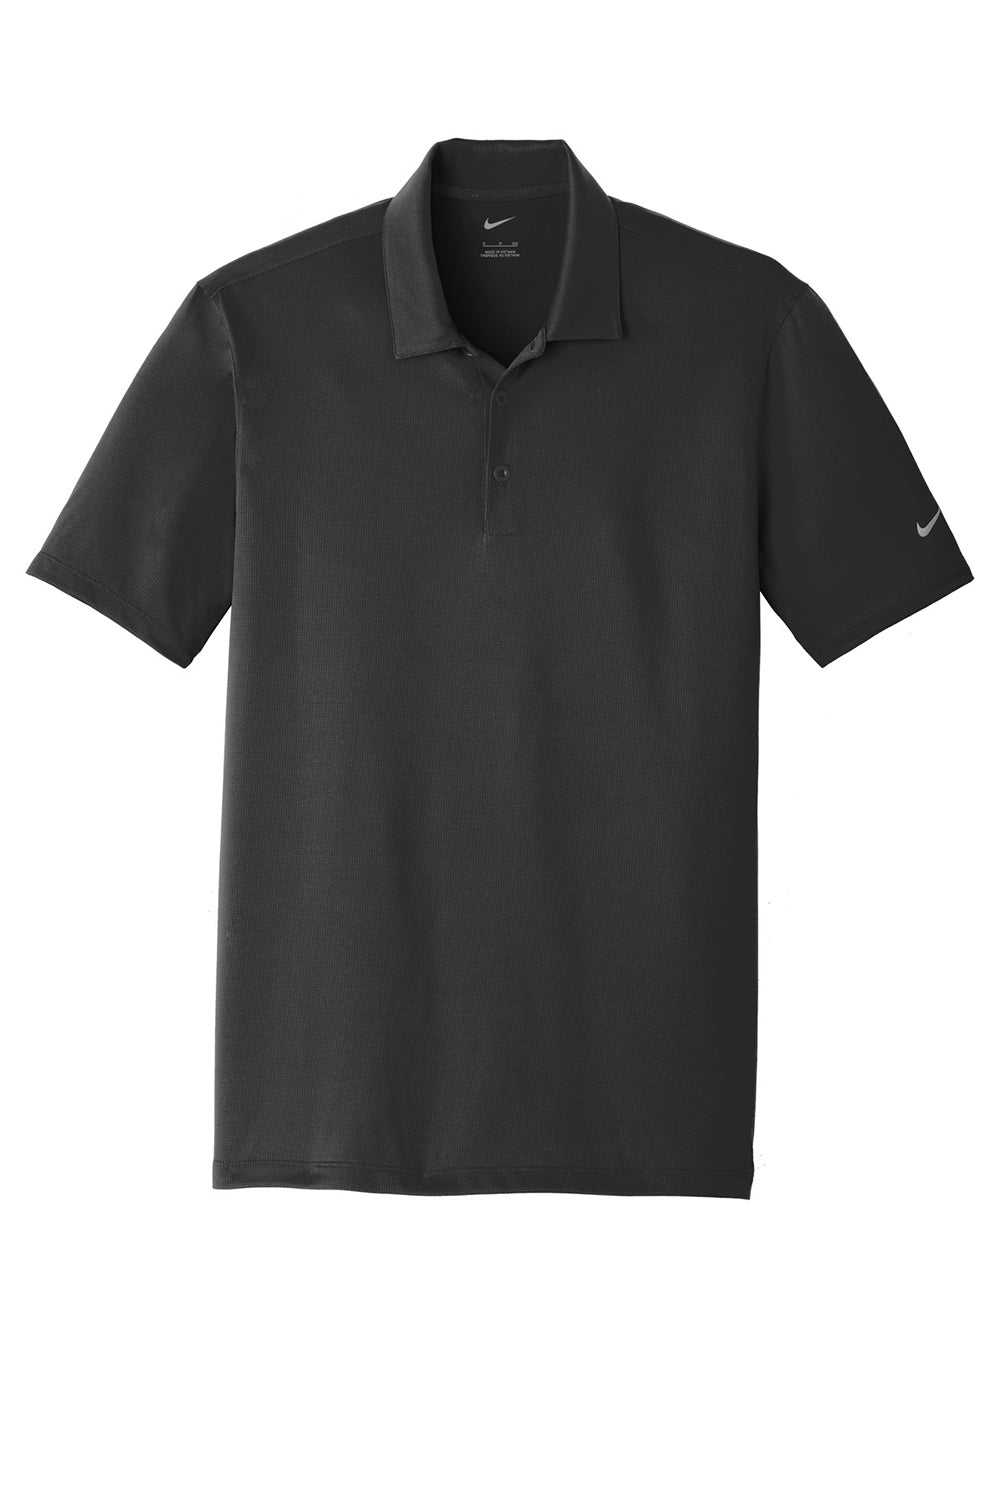 Nike 883681 Mens Legacy Dri-Fit Moisture Wicking Short Sleeve Polo Shirt Black Flat Front